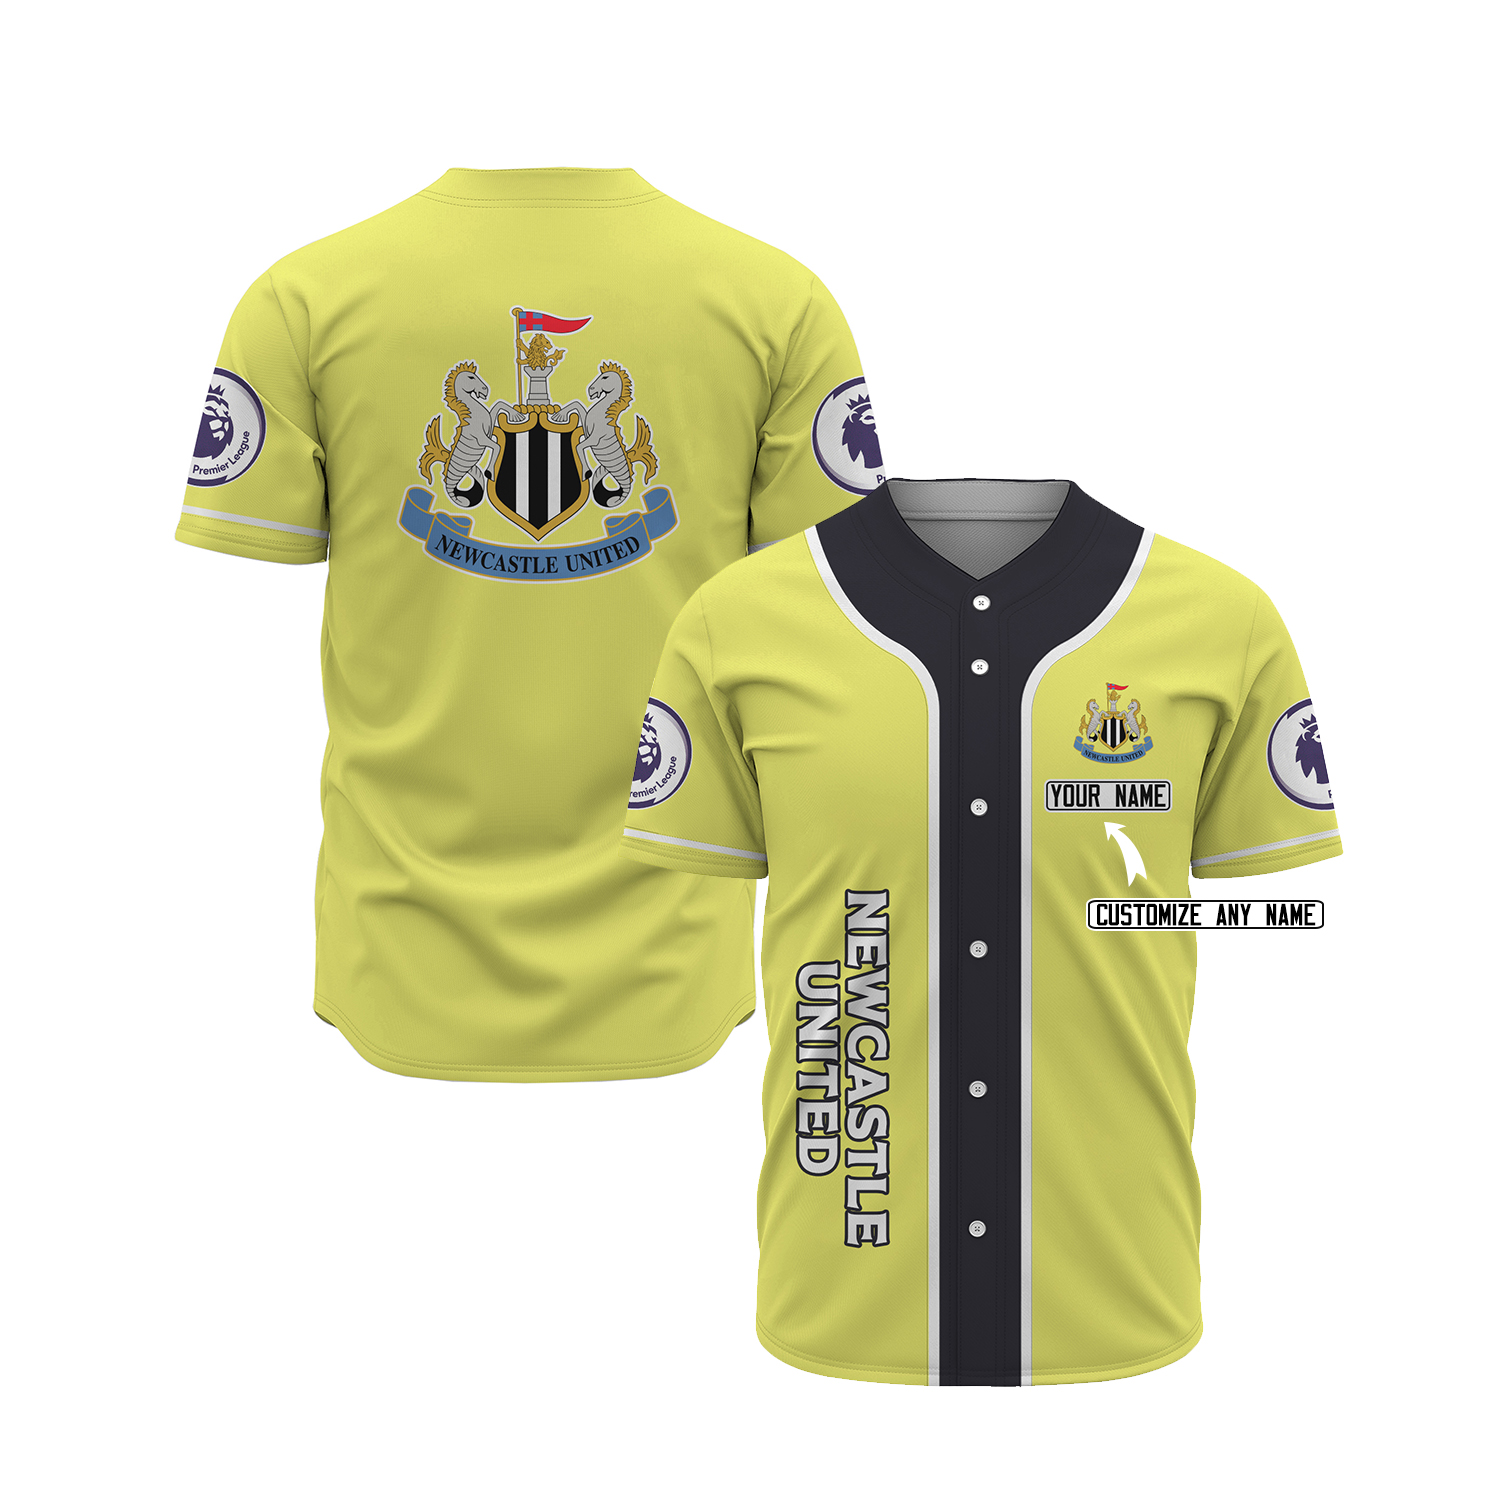 Newcastle United custom pesonalized name baseball jersey 21